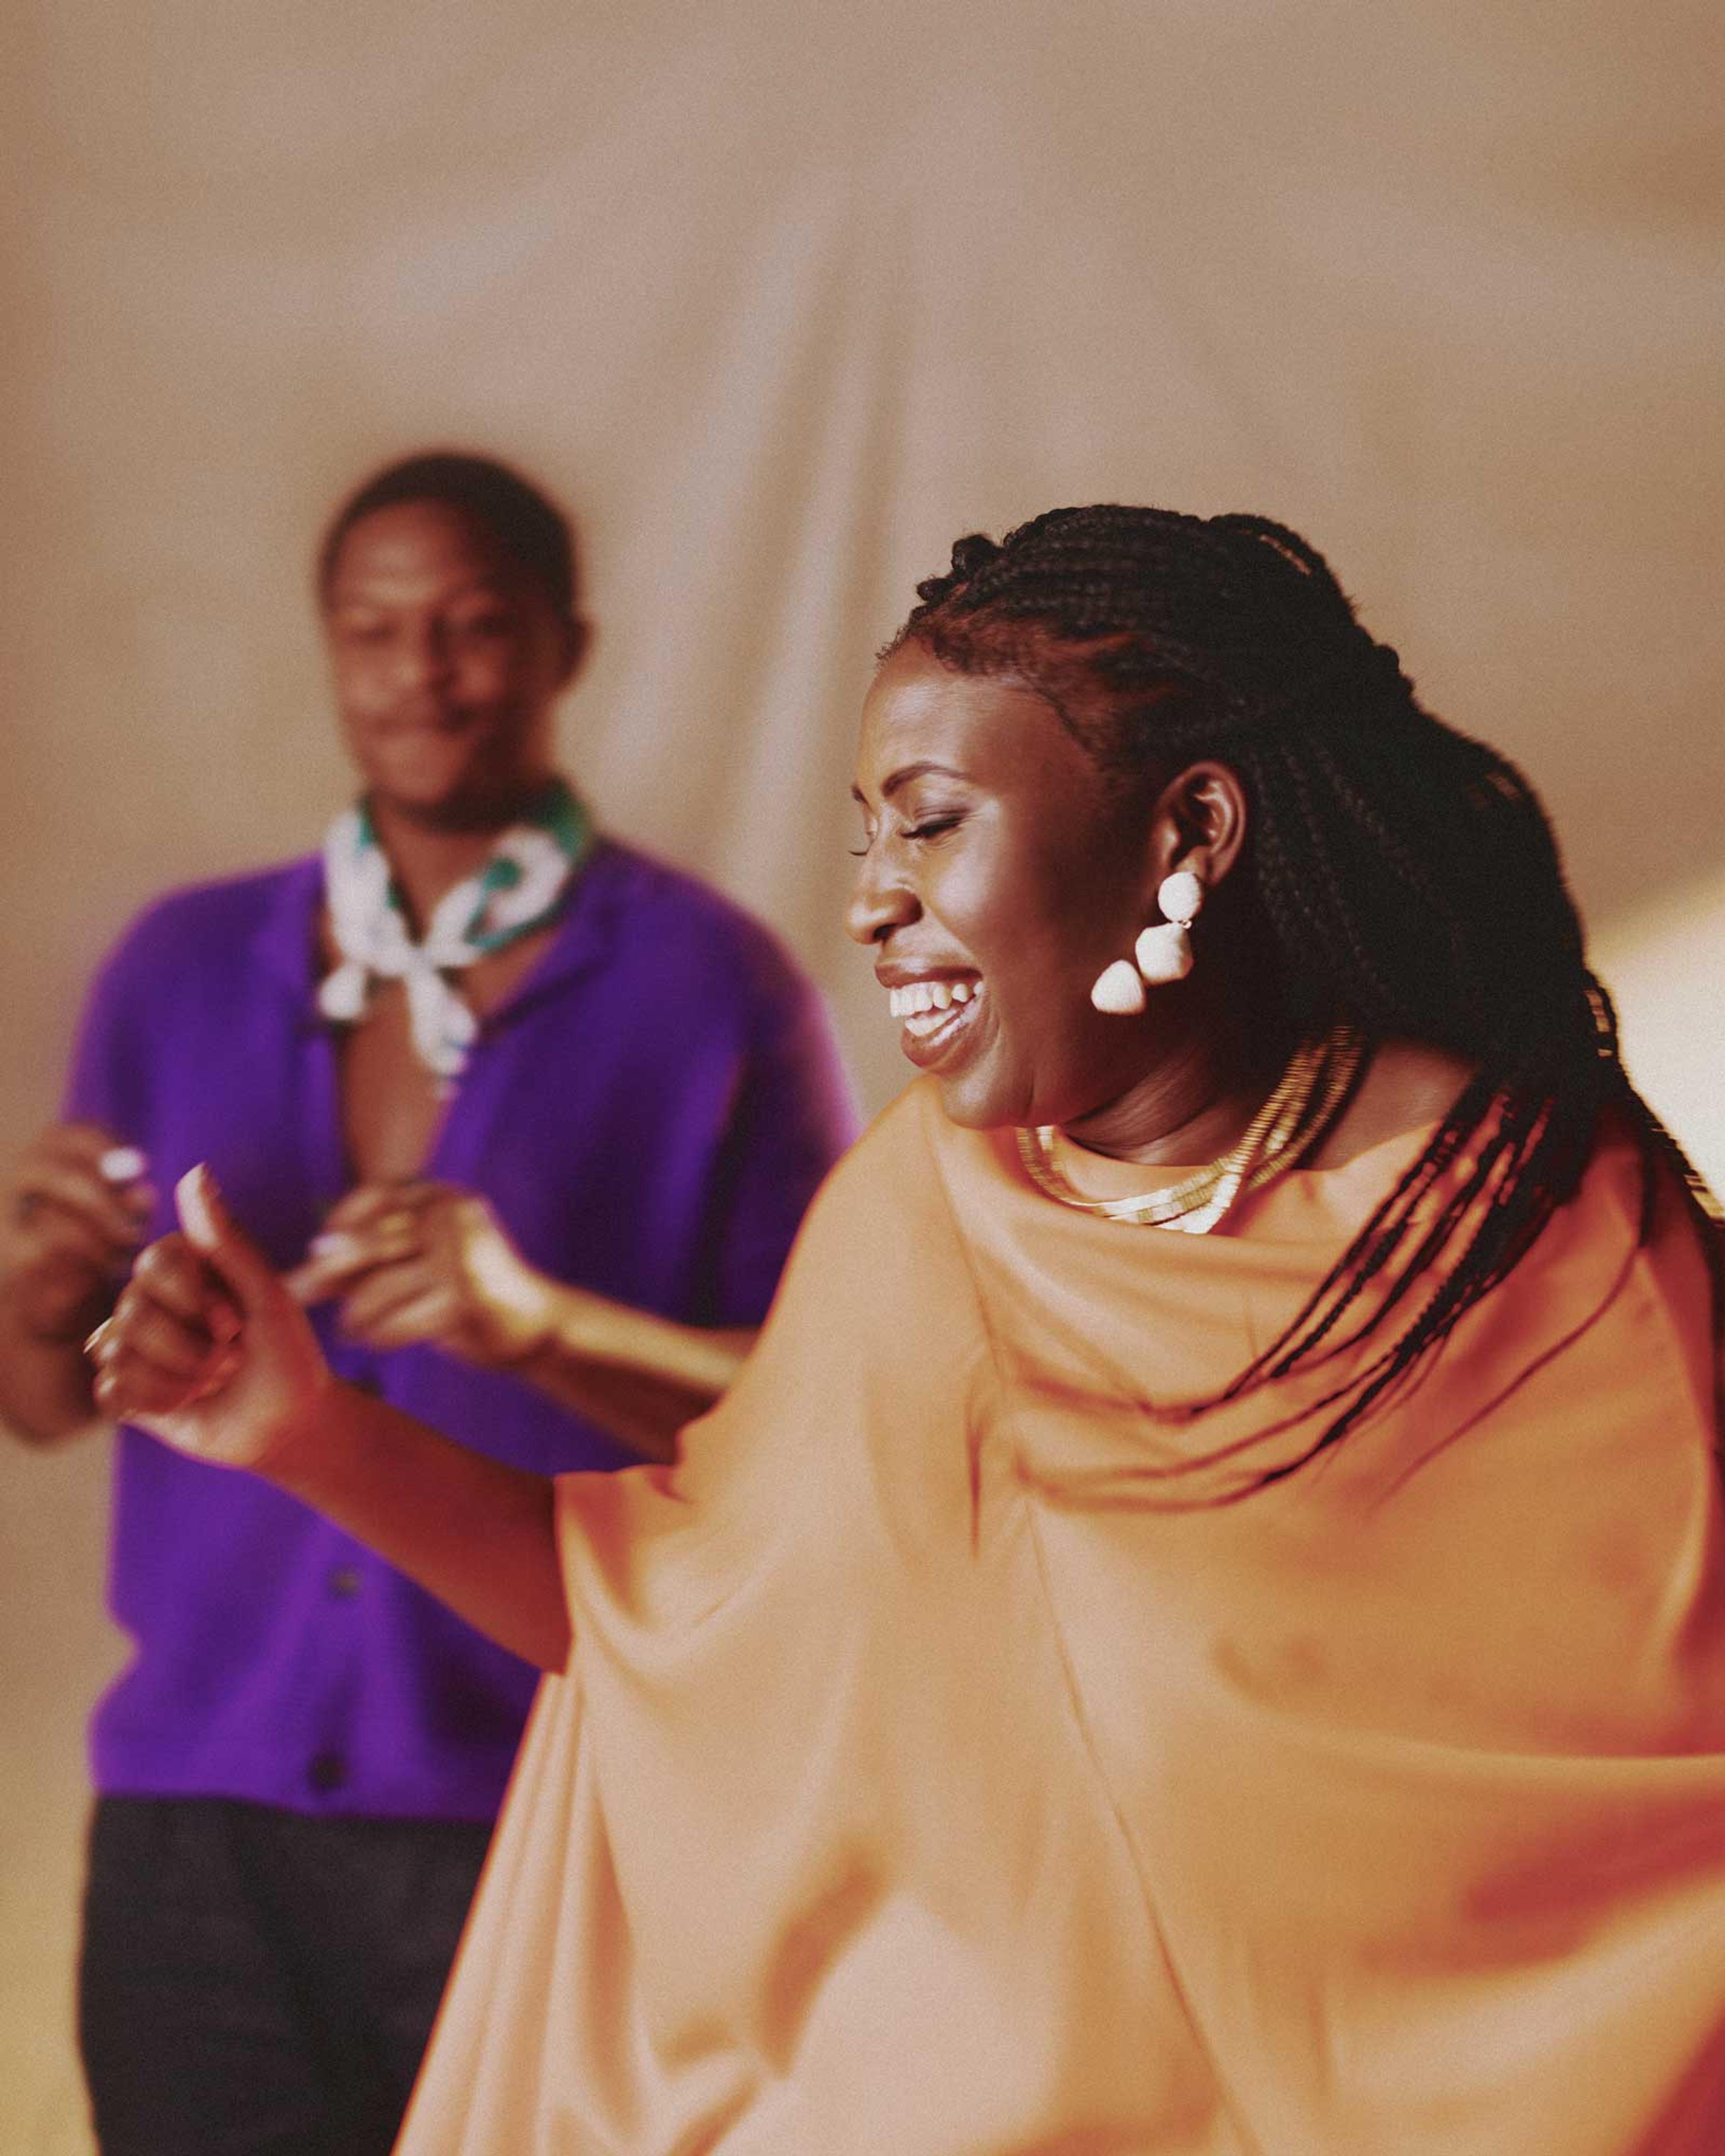 Co-Founders Joy Ekuta and Quinnton Harris dancing during a photo shoot.